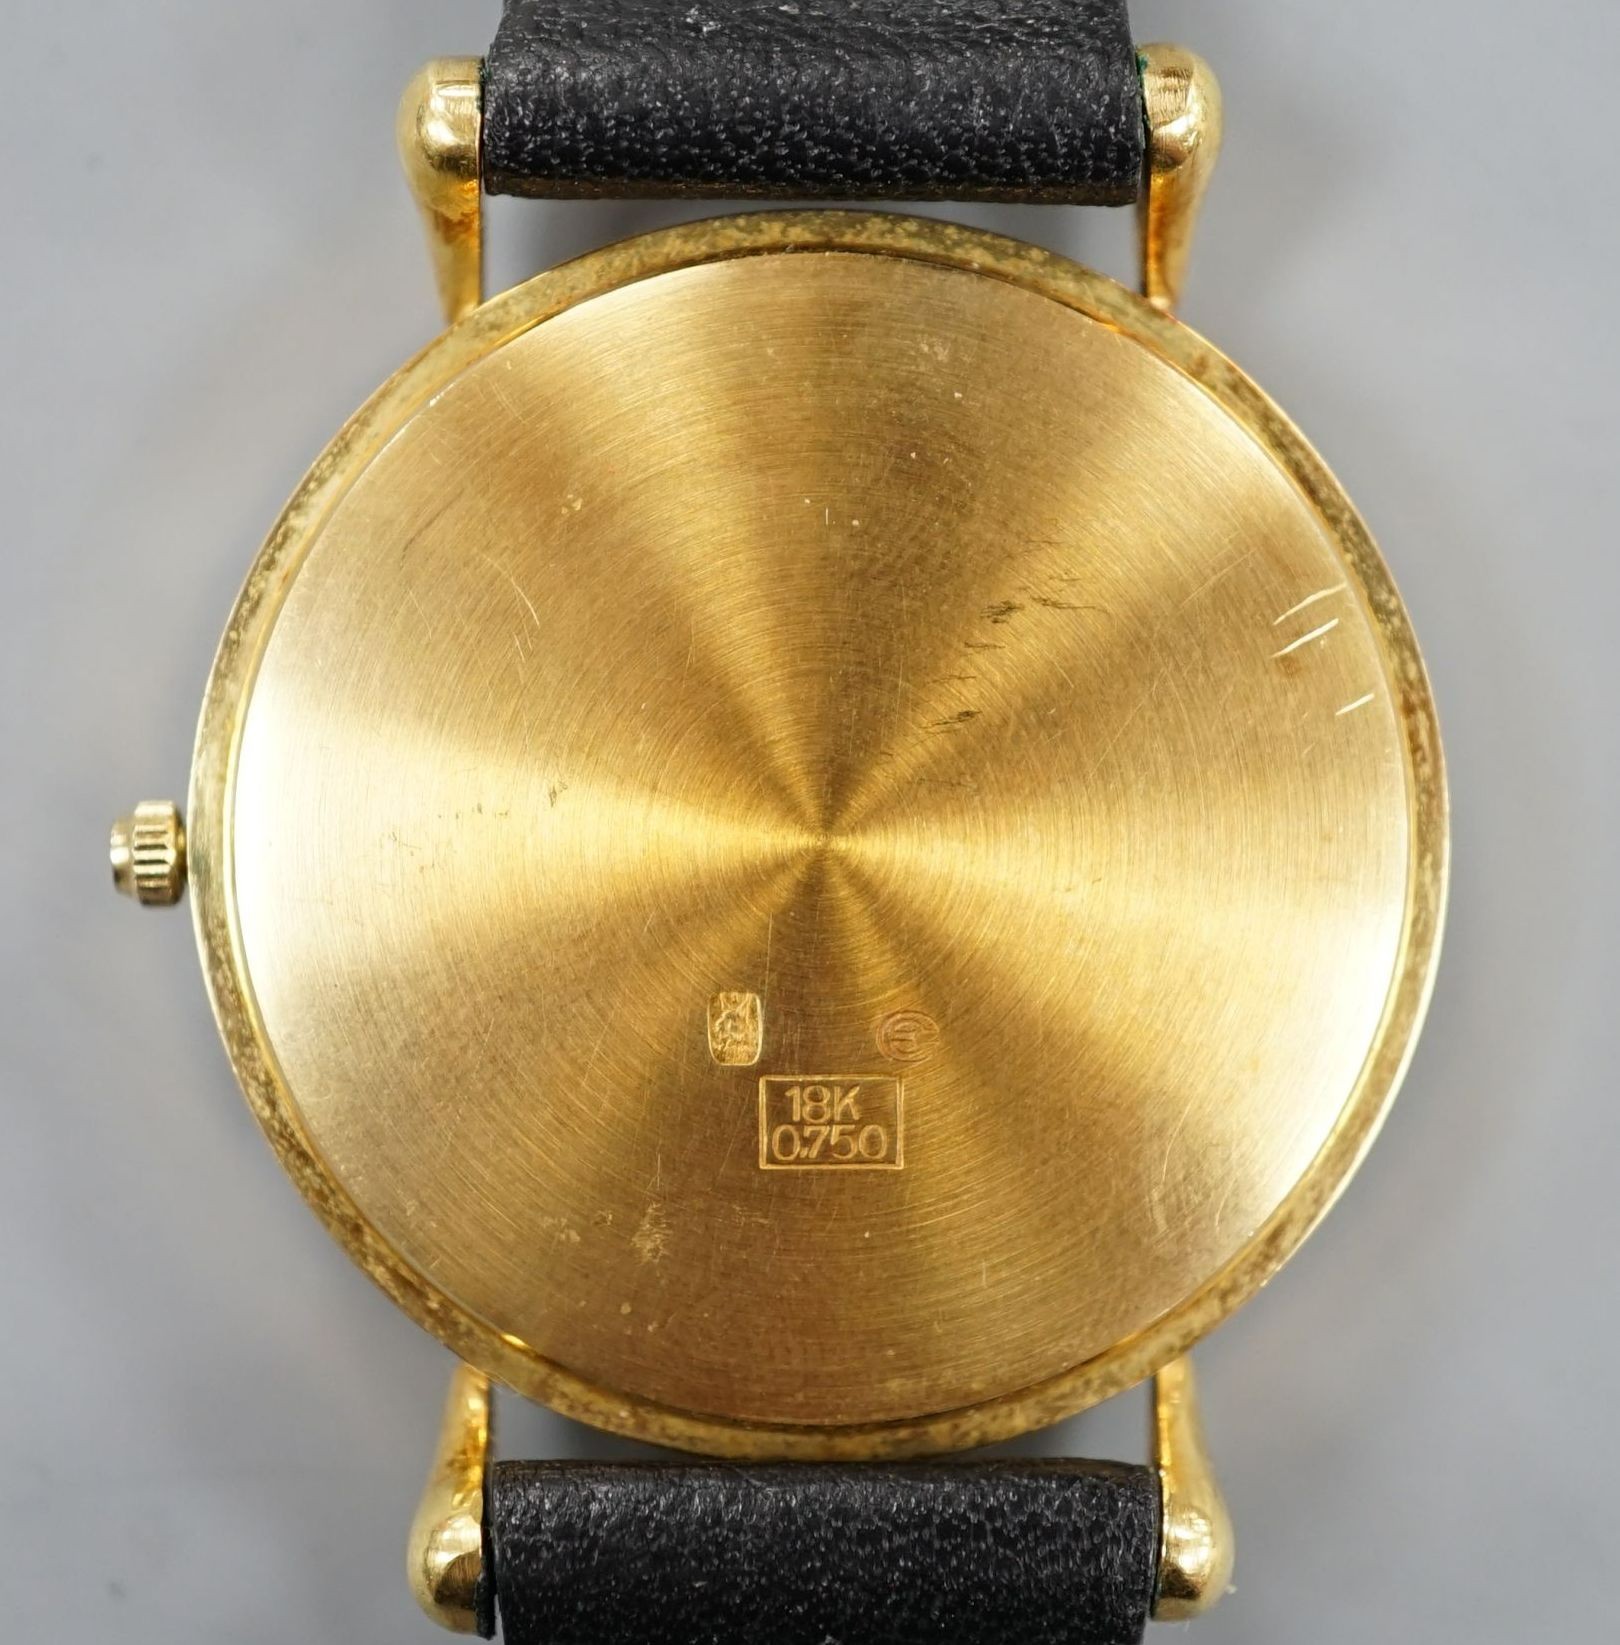 A modern 18k Mathey-Tissot calendar moonphase quartz wrist watch, on a black leather strap, no box or papers.